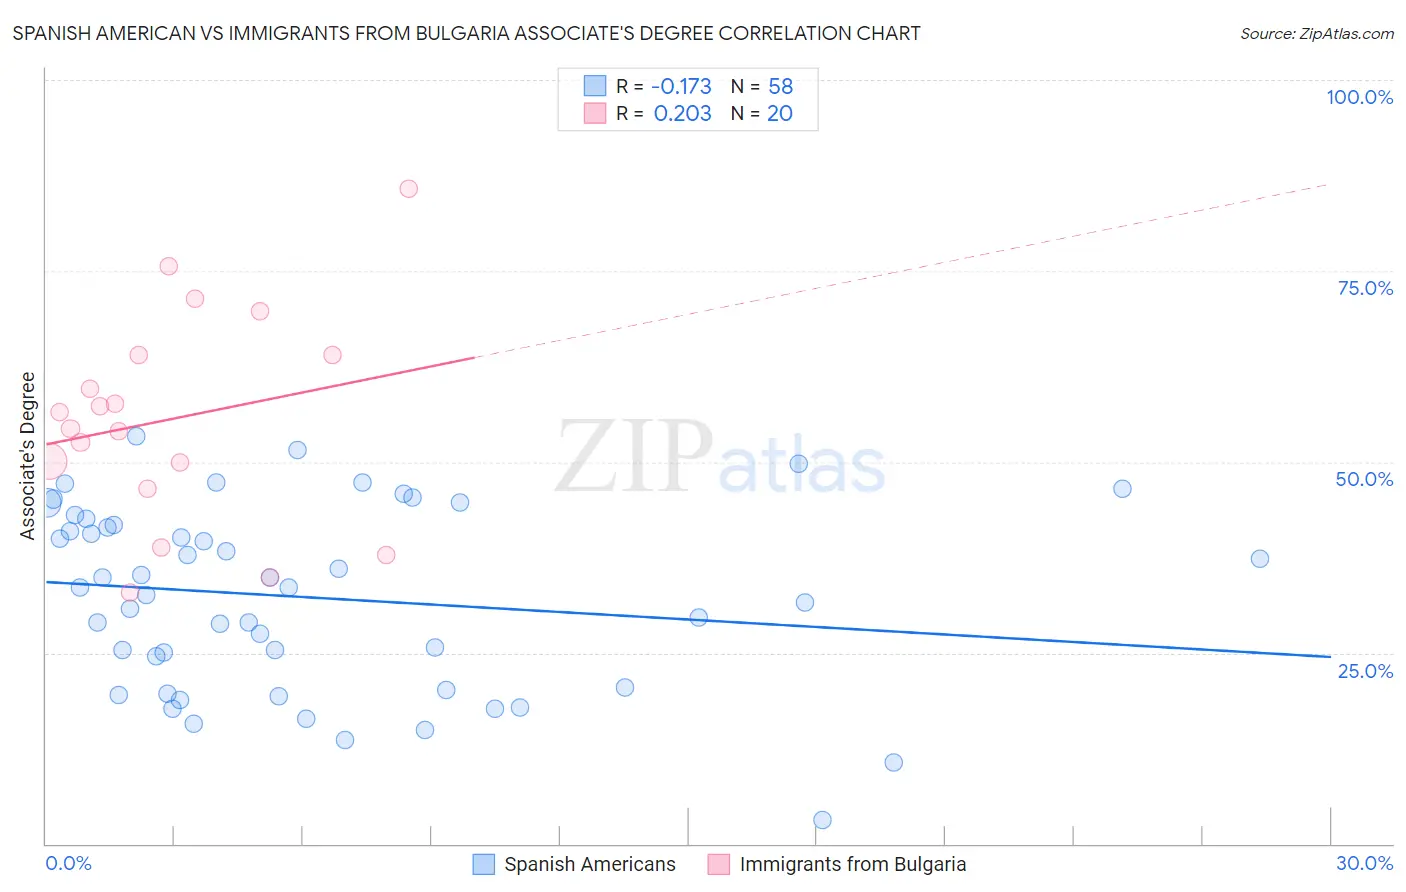 Spanish American vs Immigrants from Bulgaria Associate's Degree